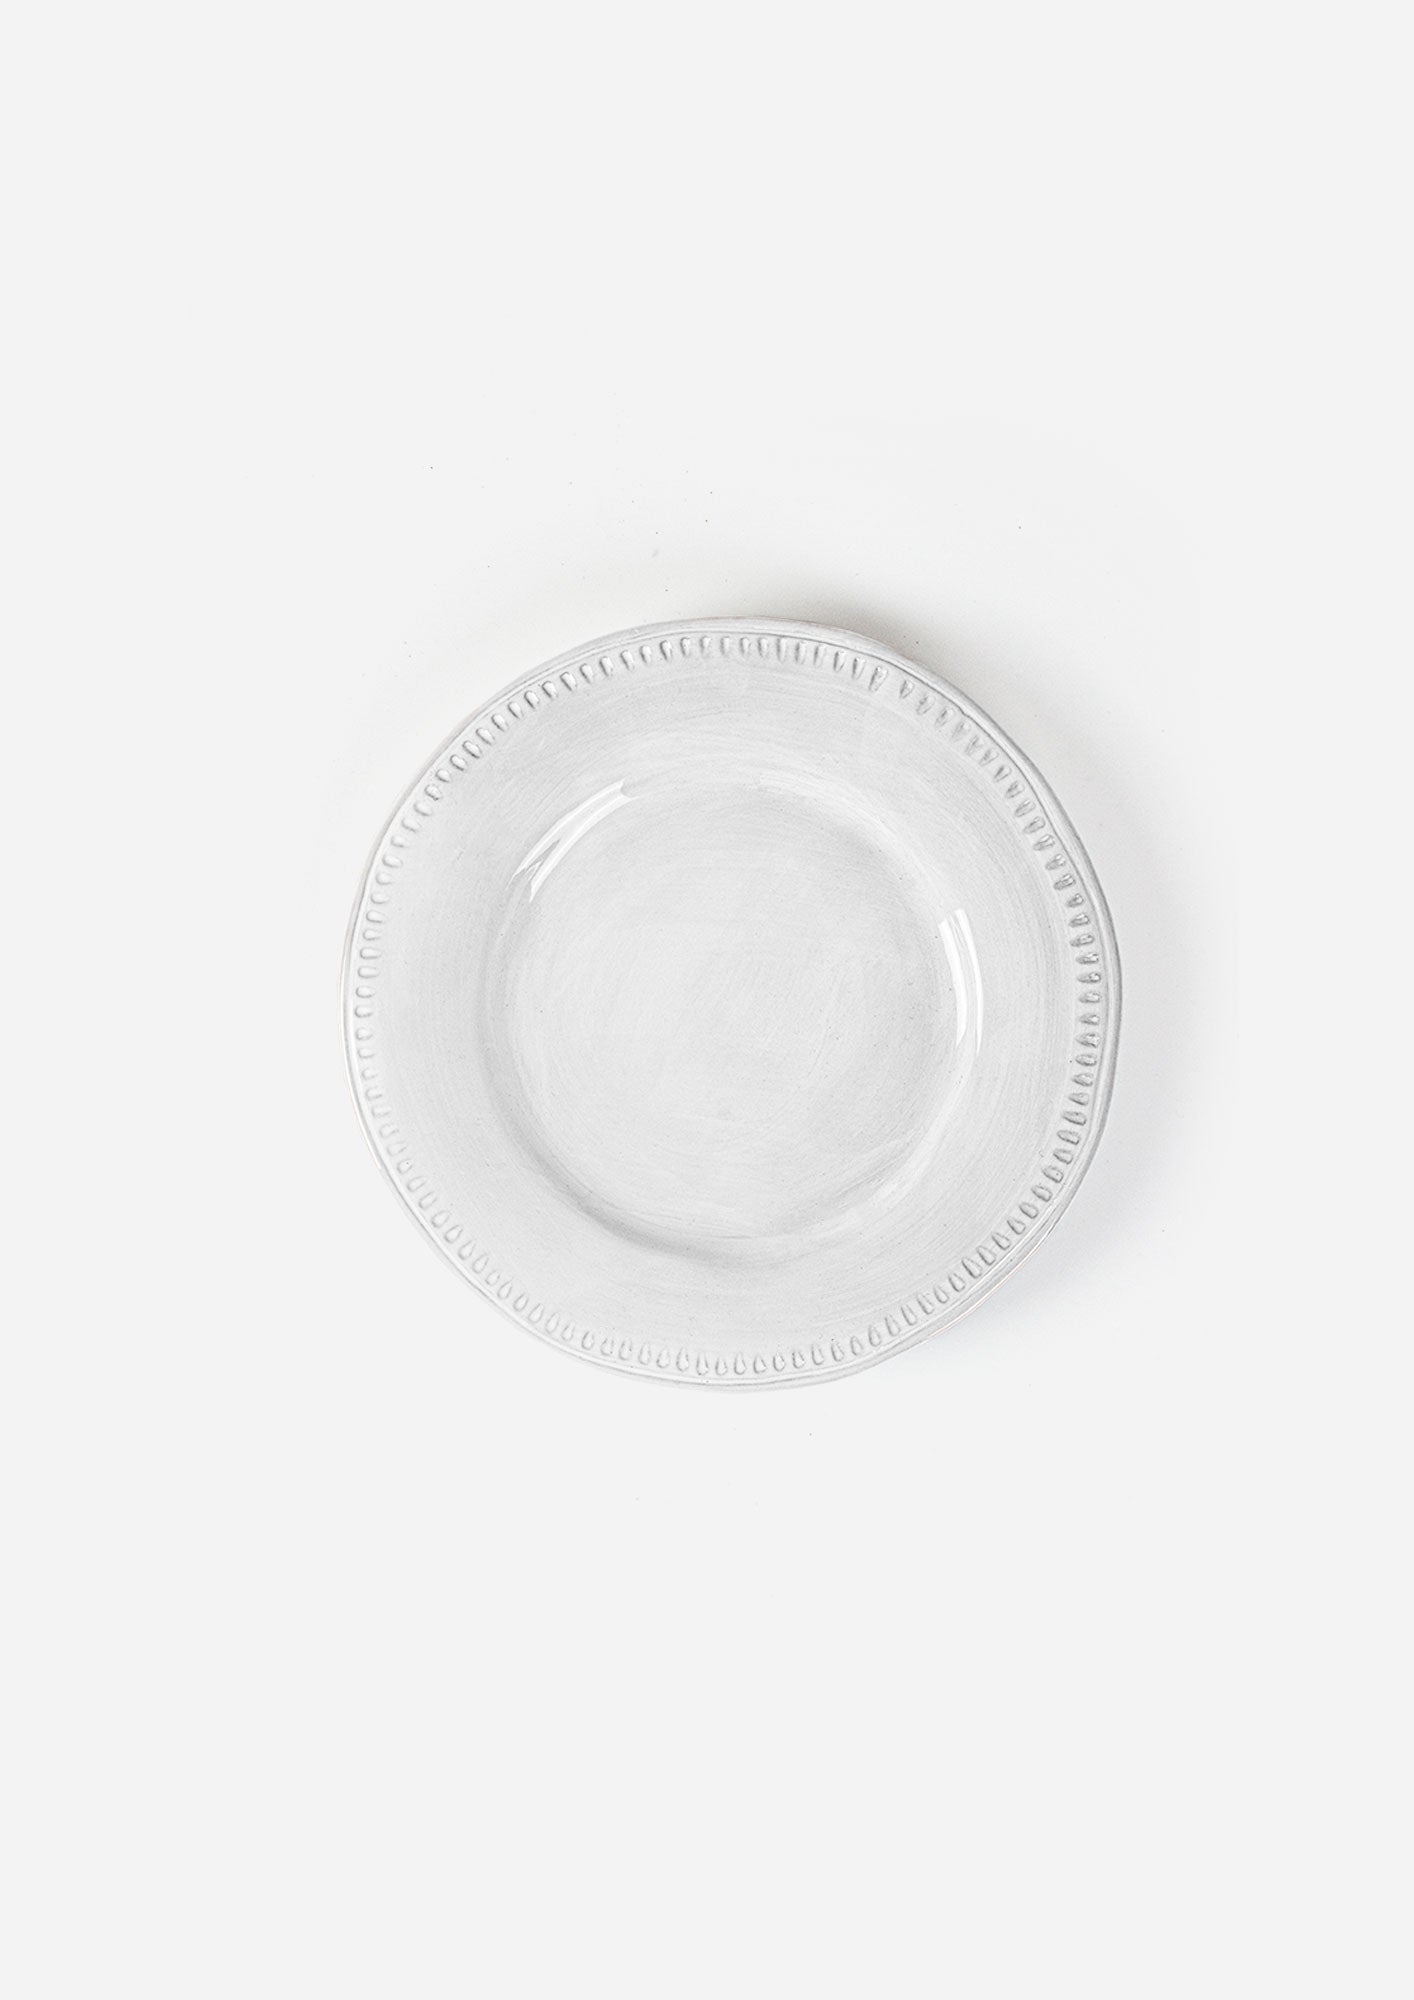 Sumner Lunch Plate